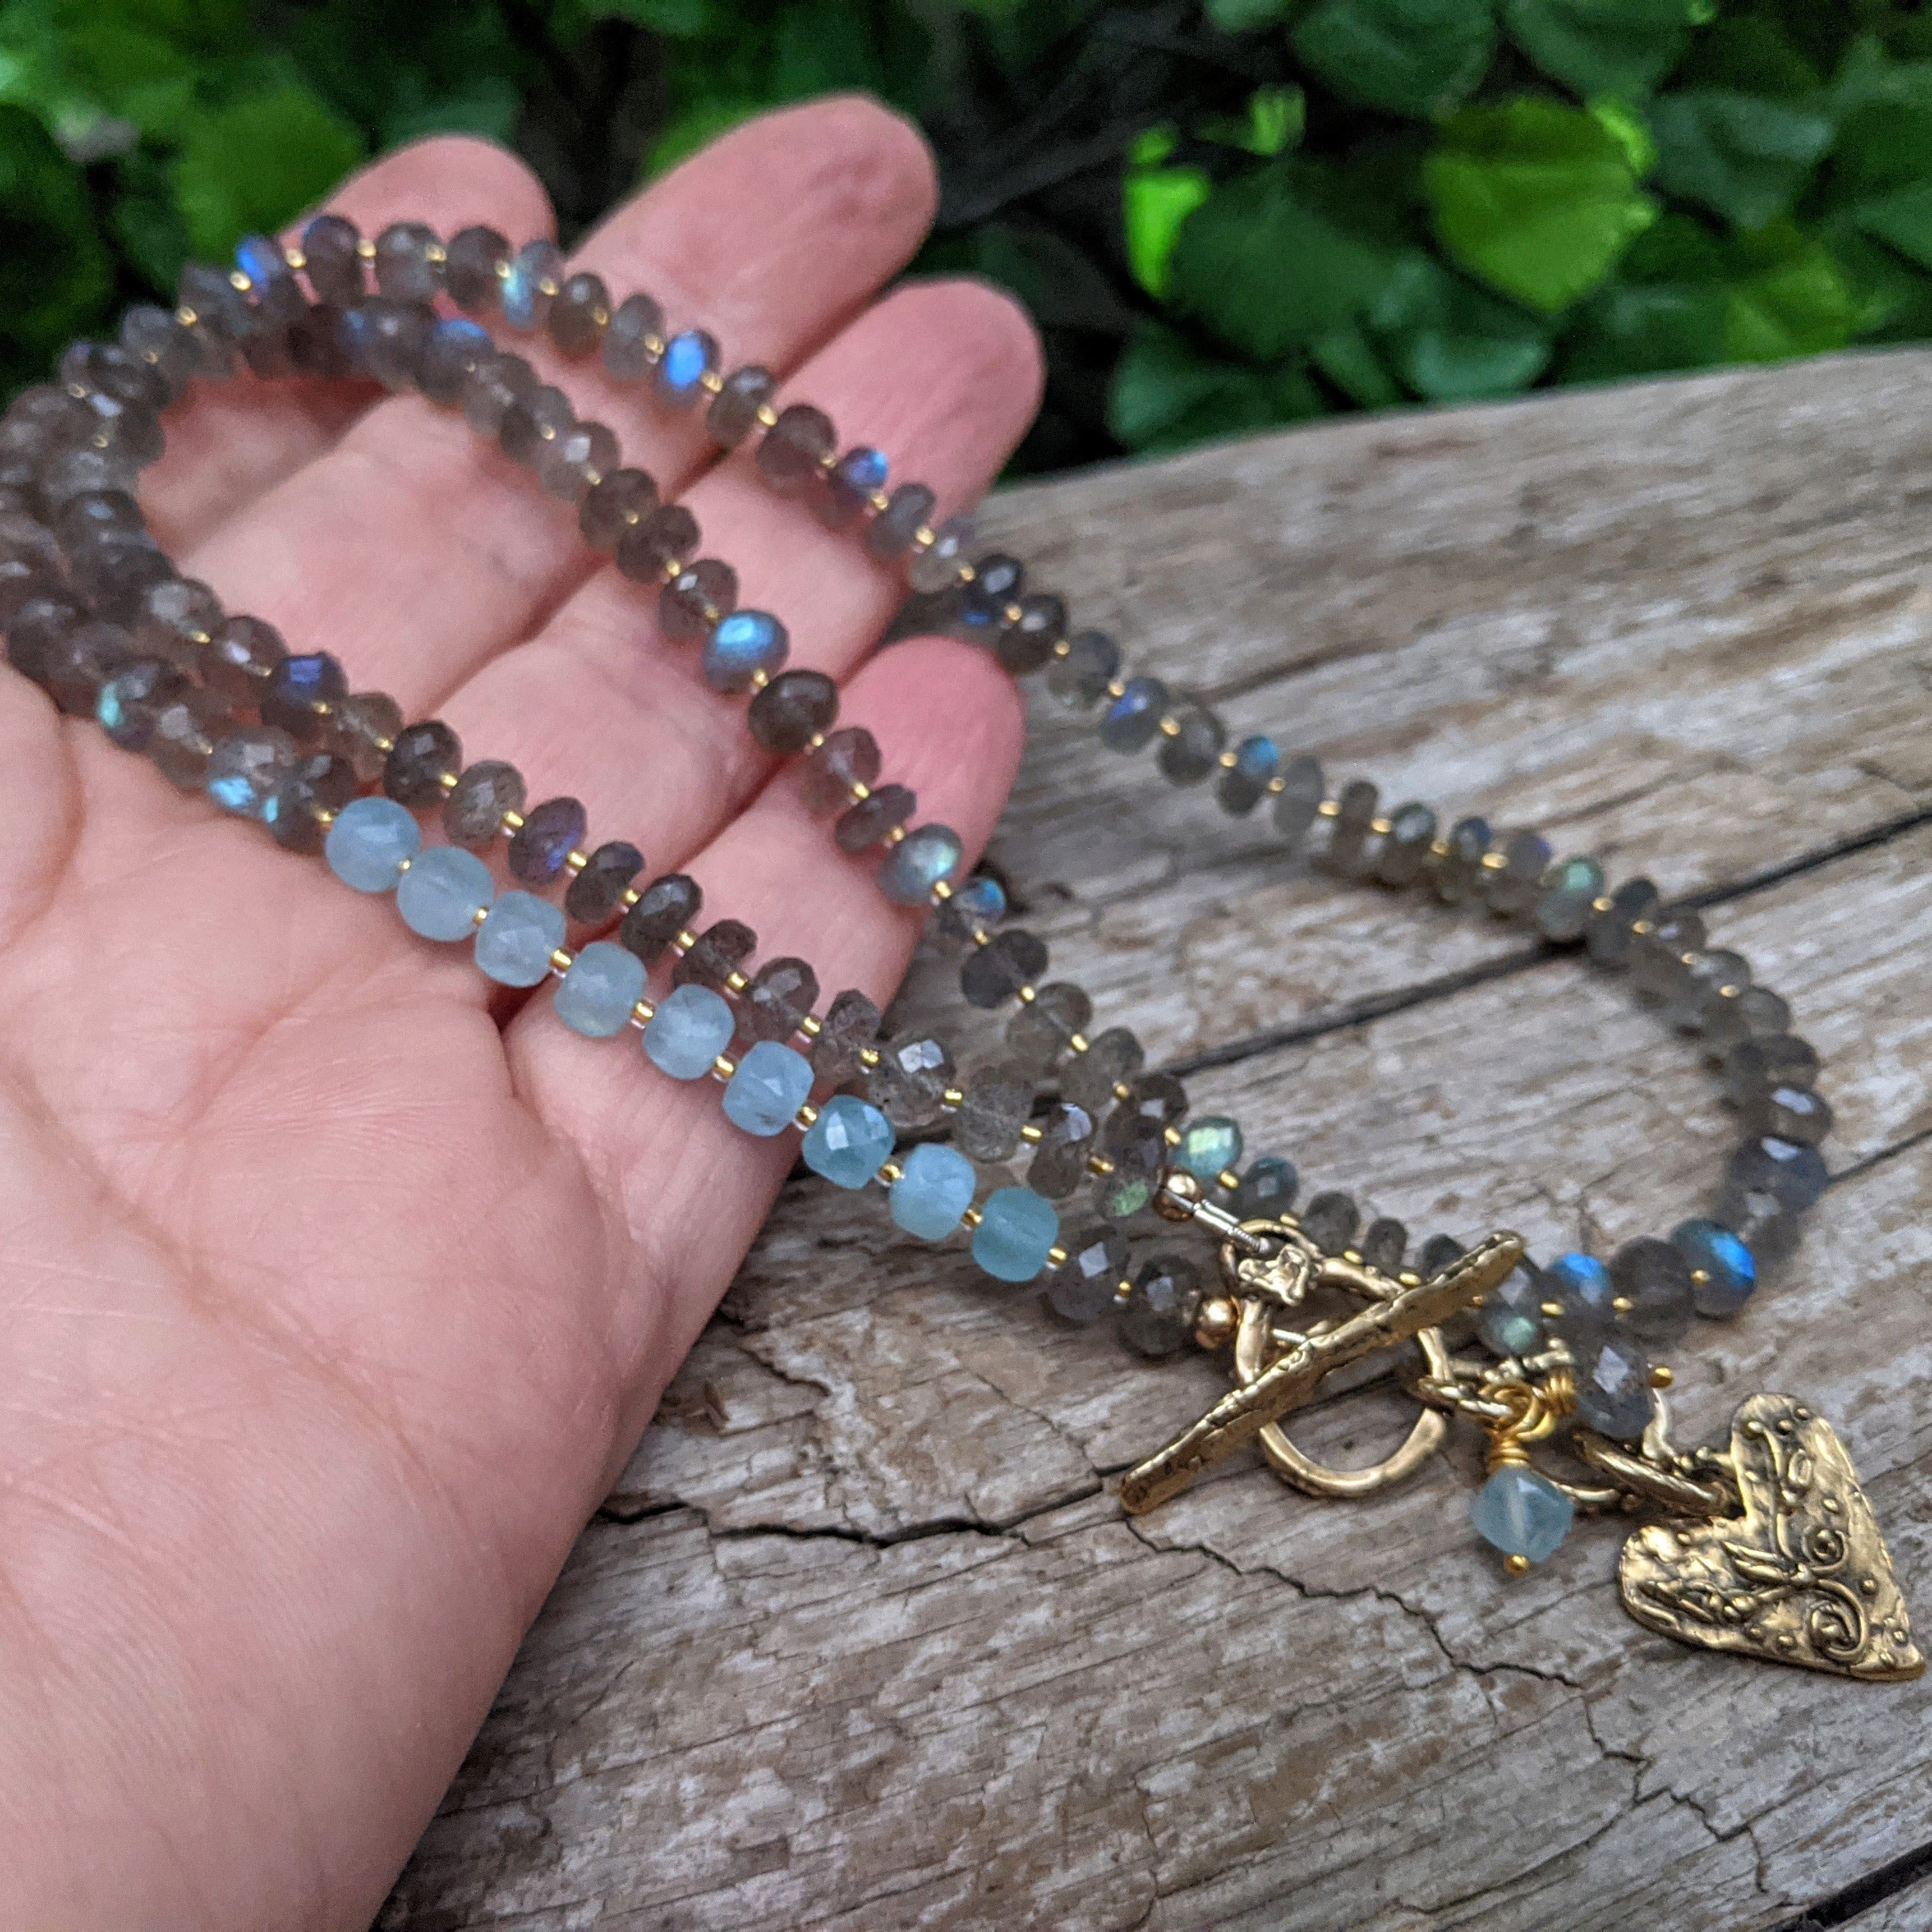 Sparkle, Blue flashy Labradorite & Aquamarine Necklace. Boho rustic necklace created by Aurora Creative Jewellery.